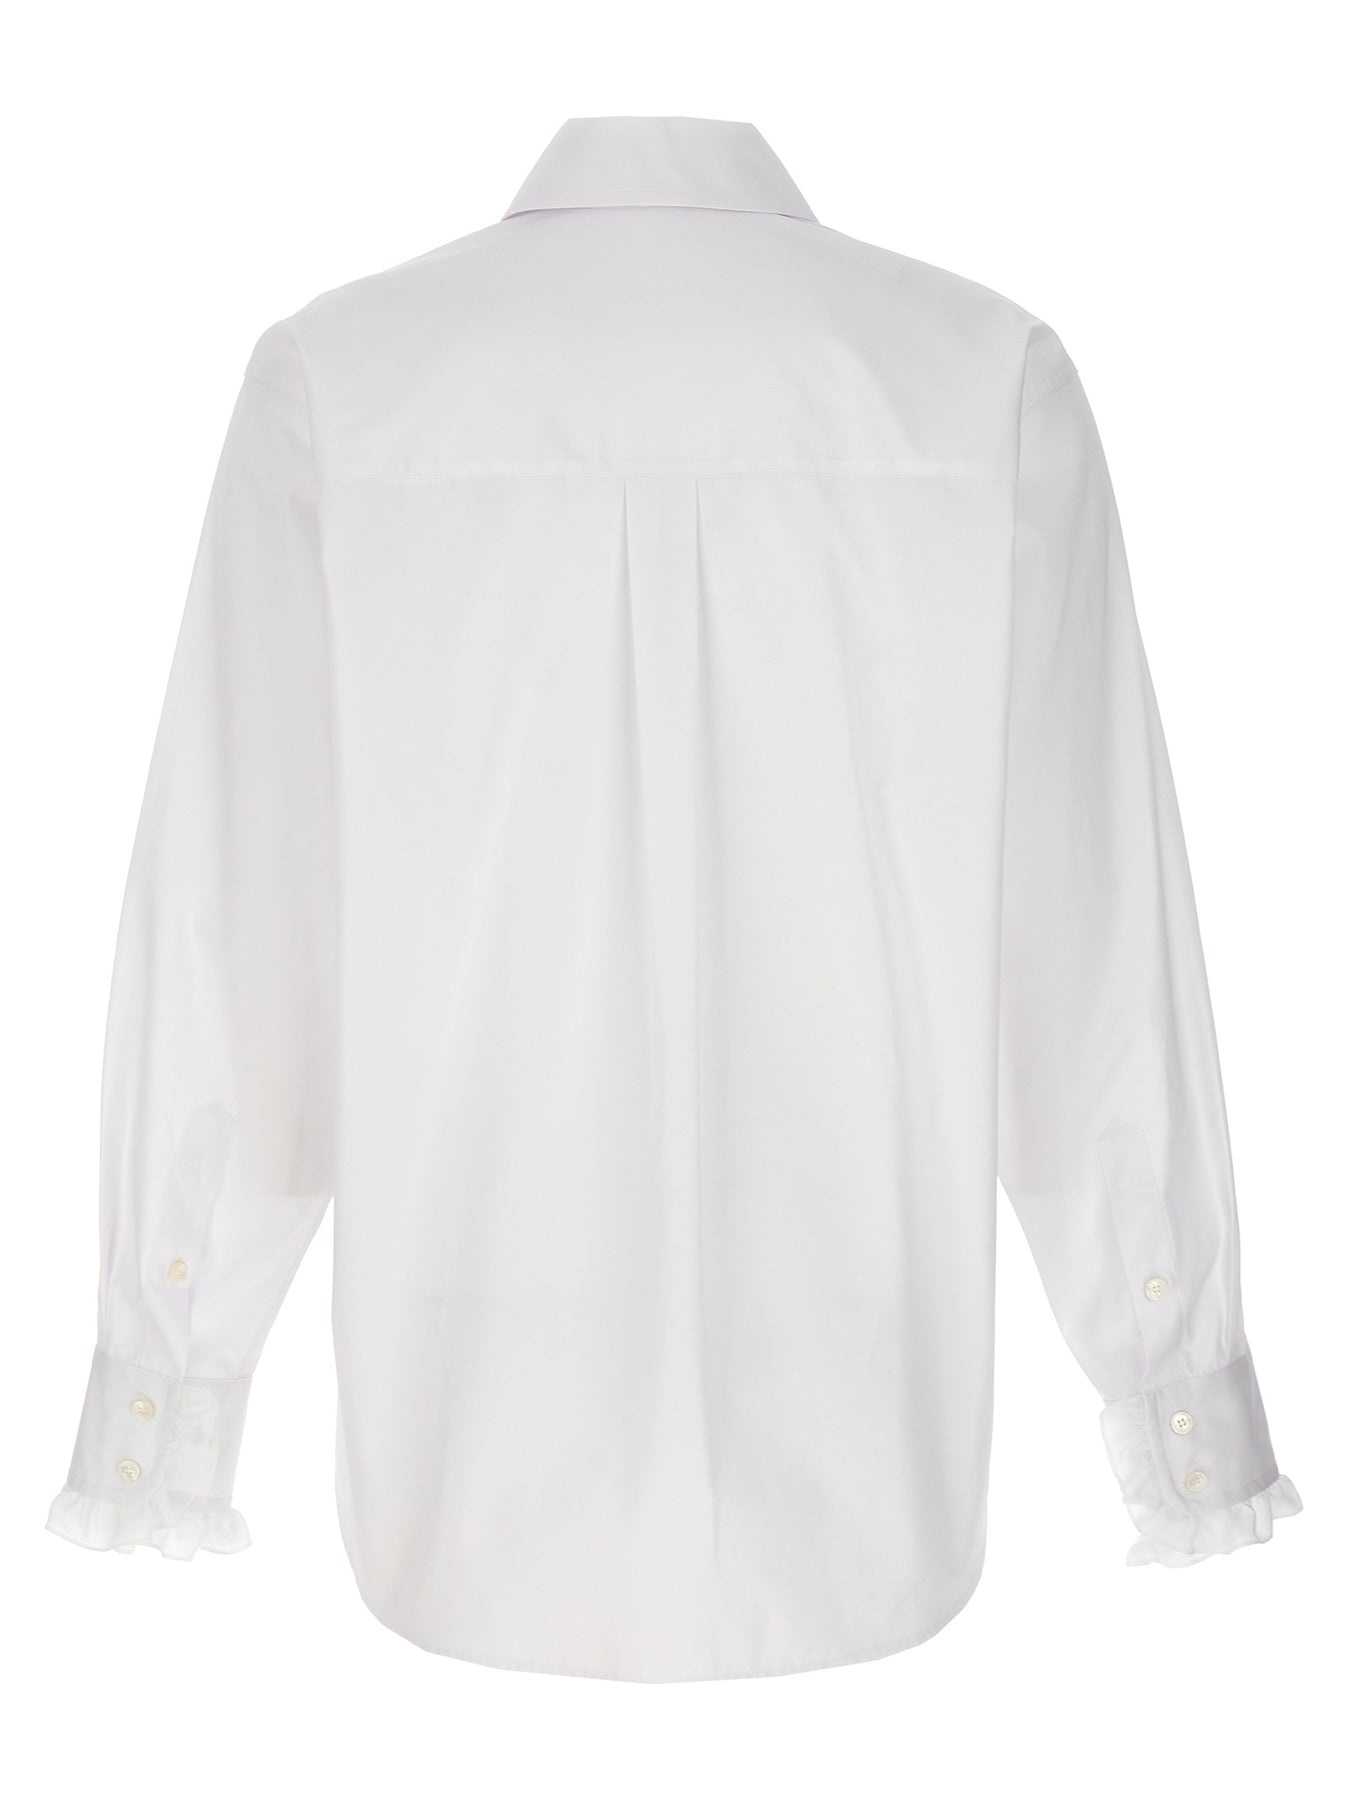 Ruffles Shirt Shirt, Blouse White - 2